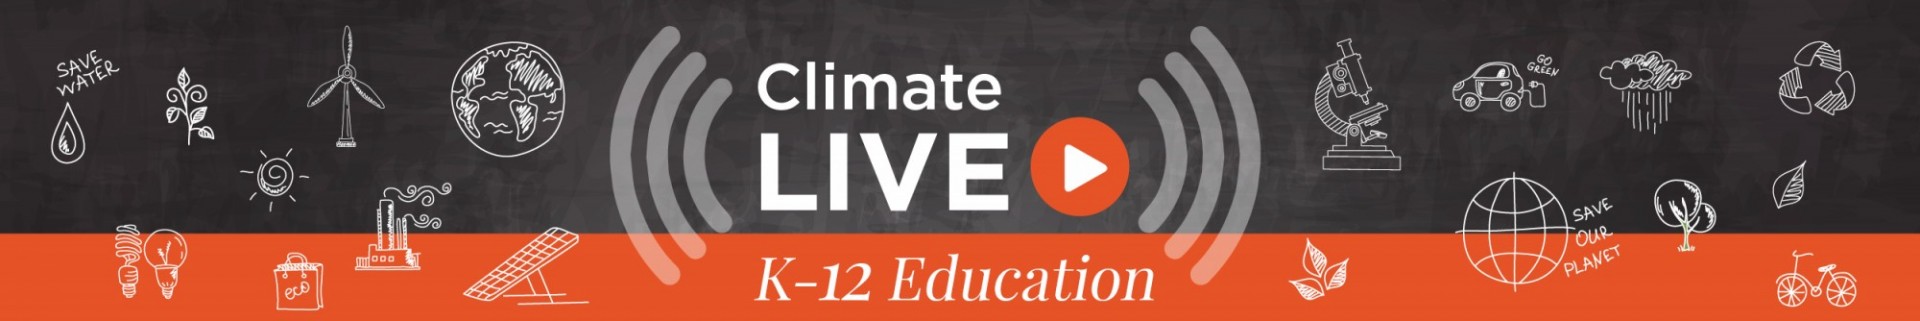 Climate LIVE K12 Education